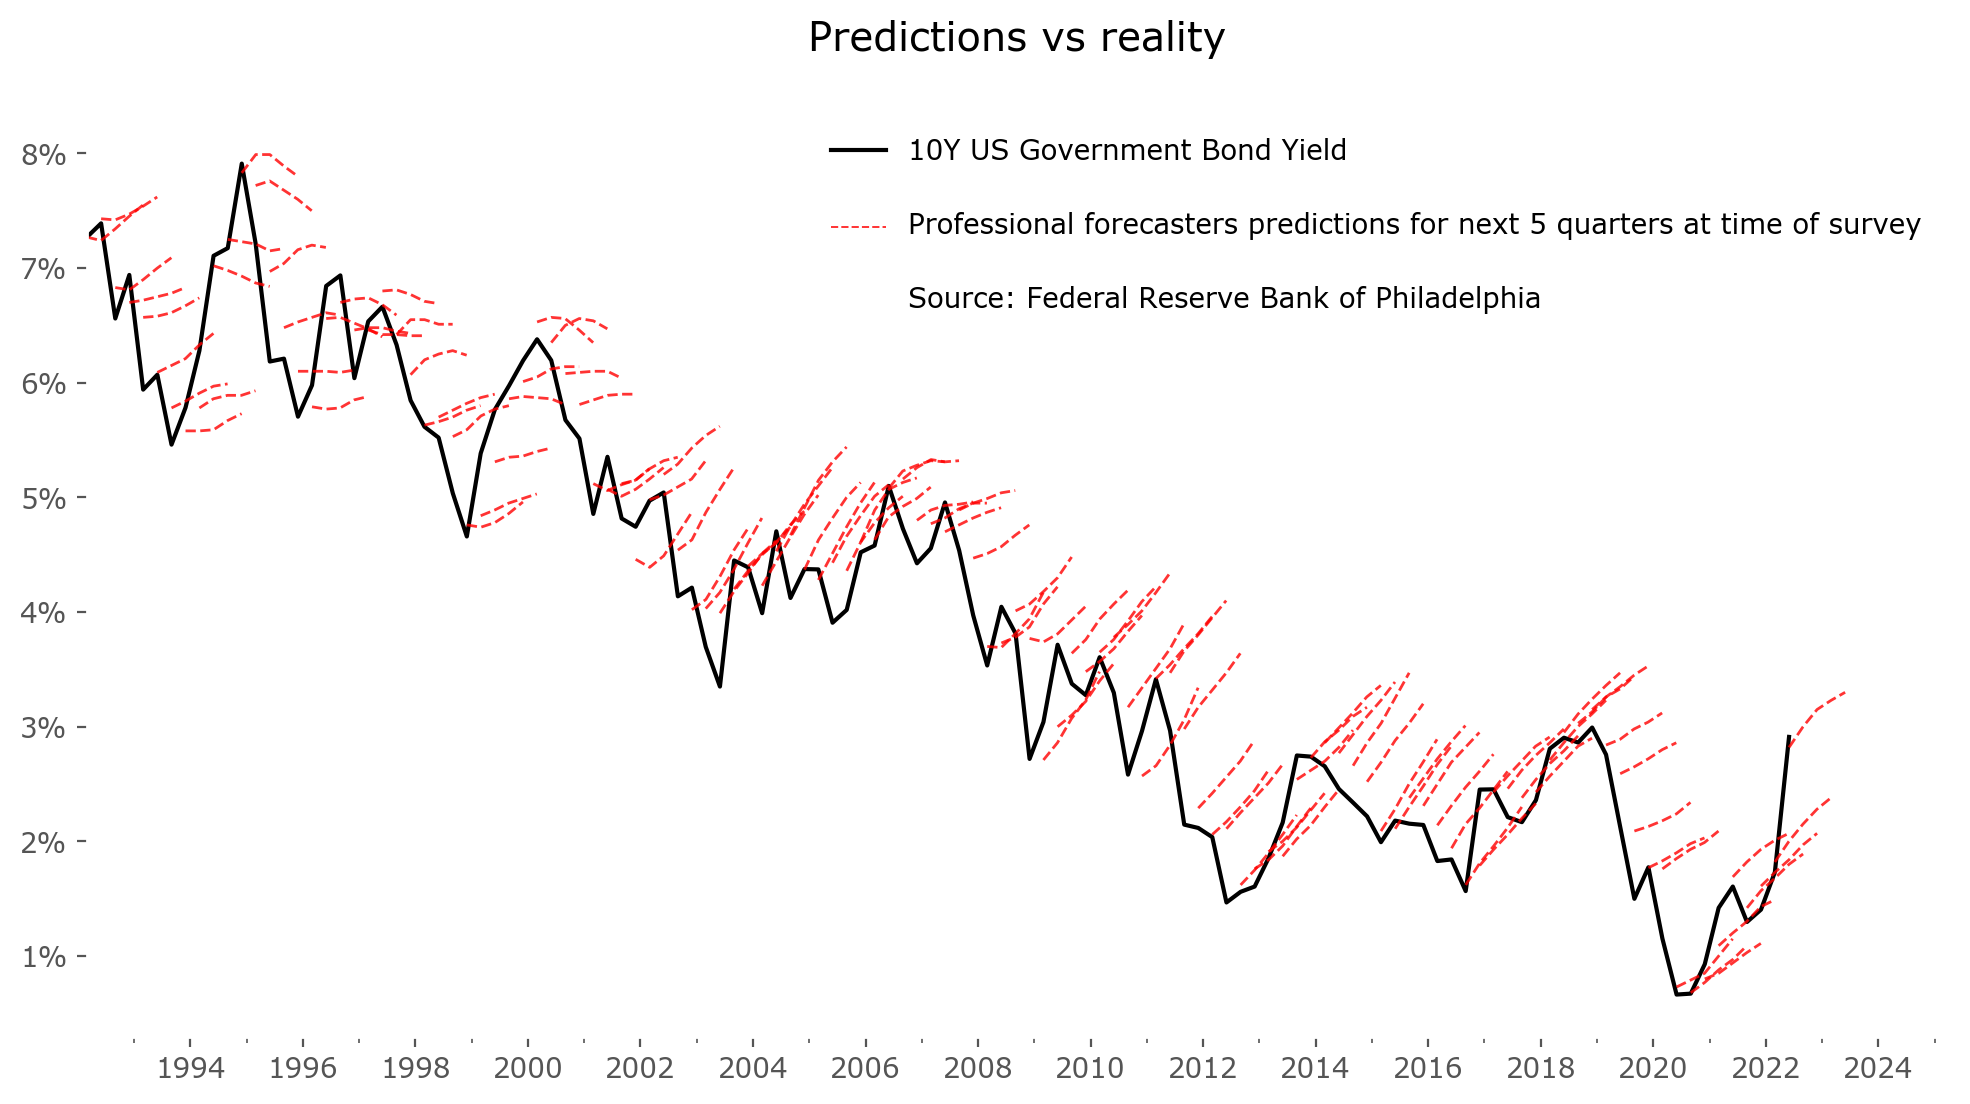 Prediction vs reality: US 10Y Bond Yield predictions for 5 quarters ahead